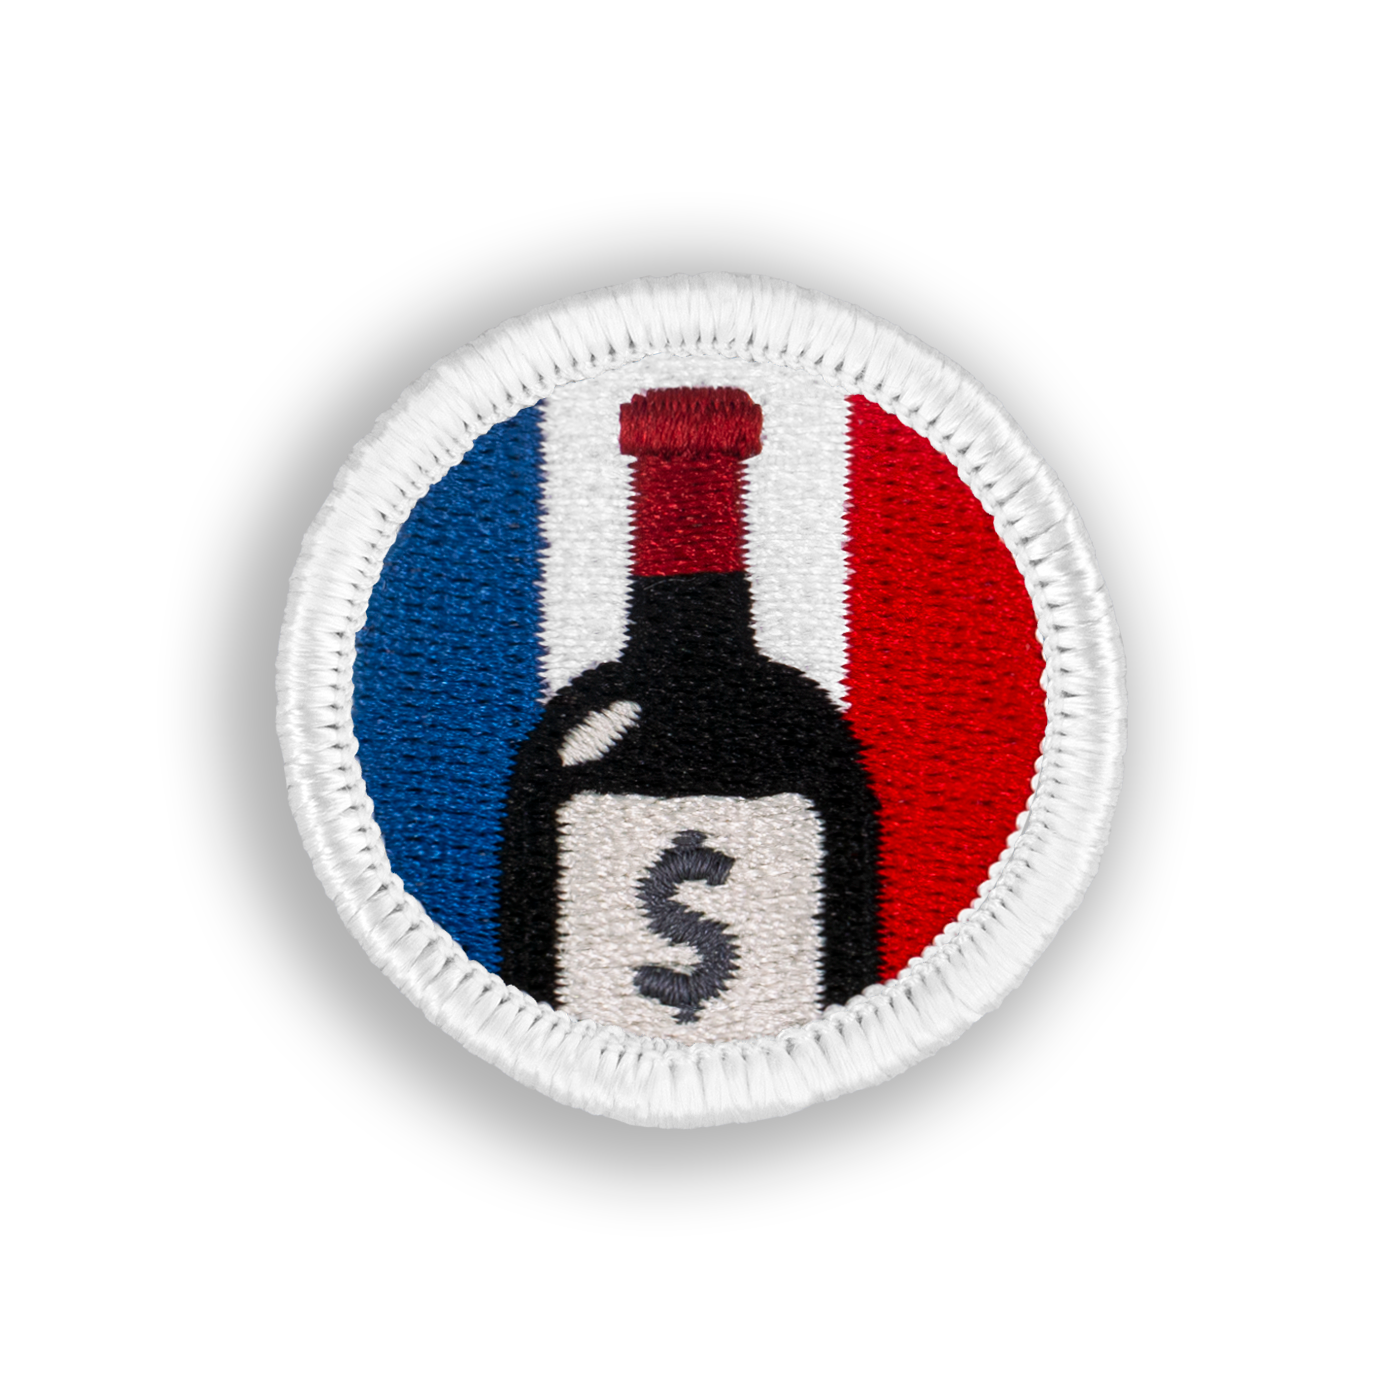 French Wine Snob Patch | Demerit Wear - Fake Merit Badges